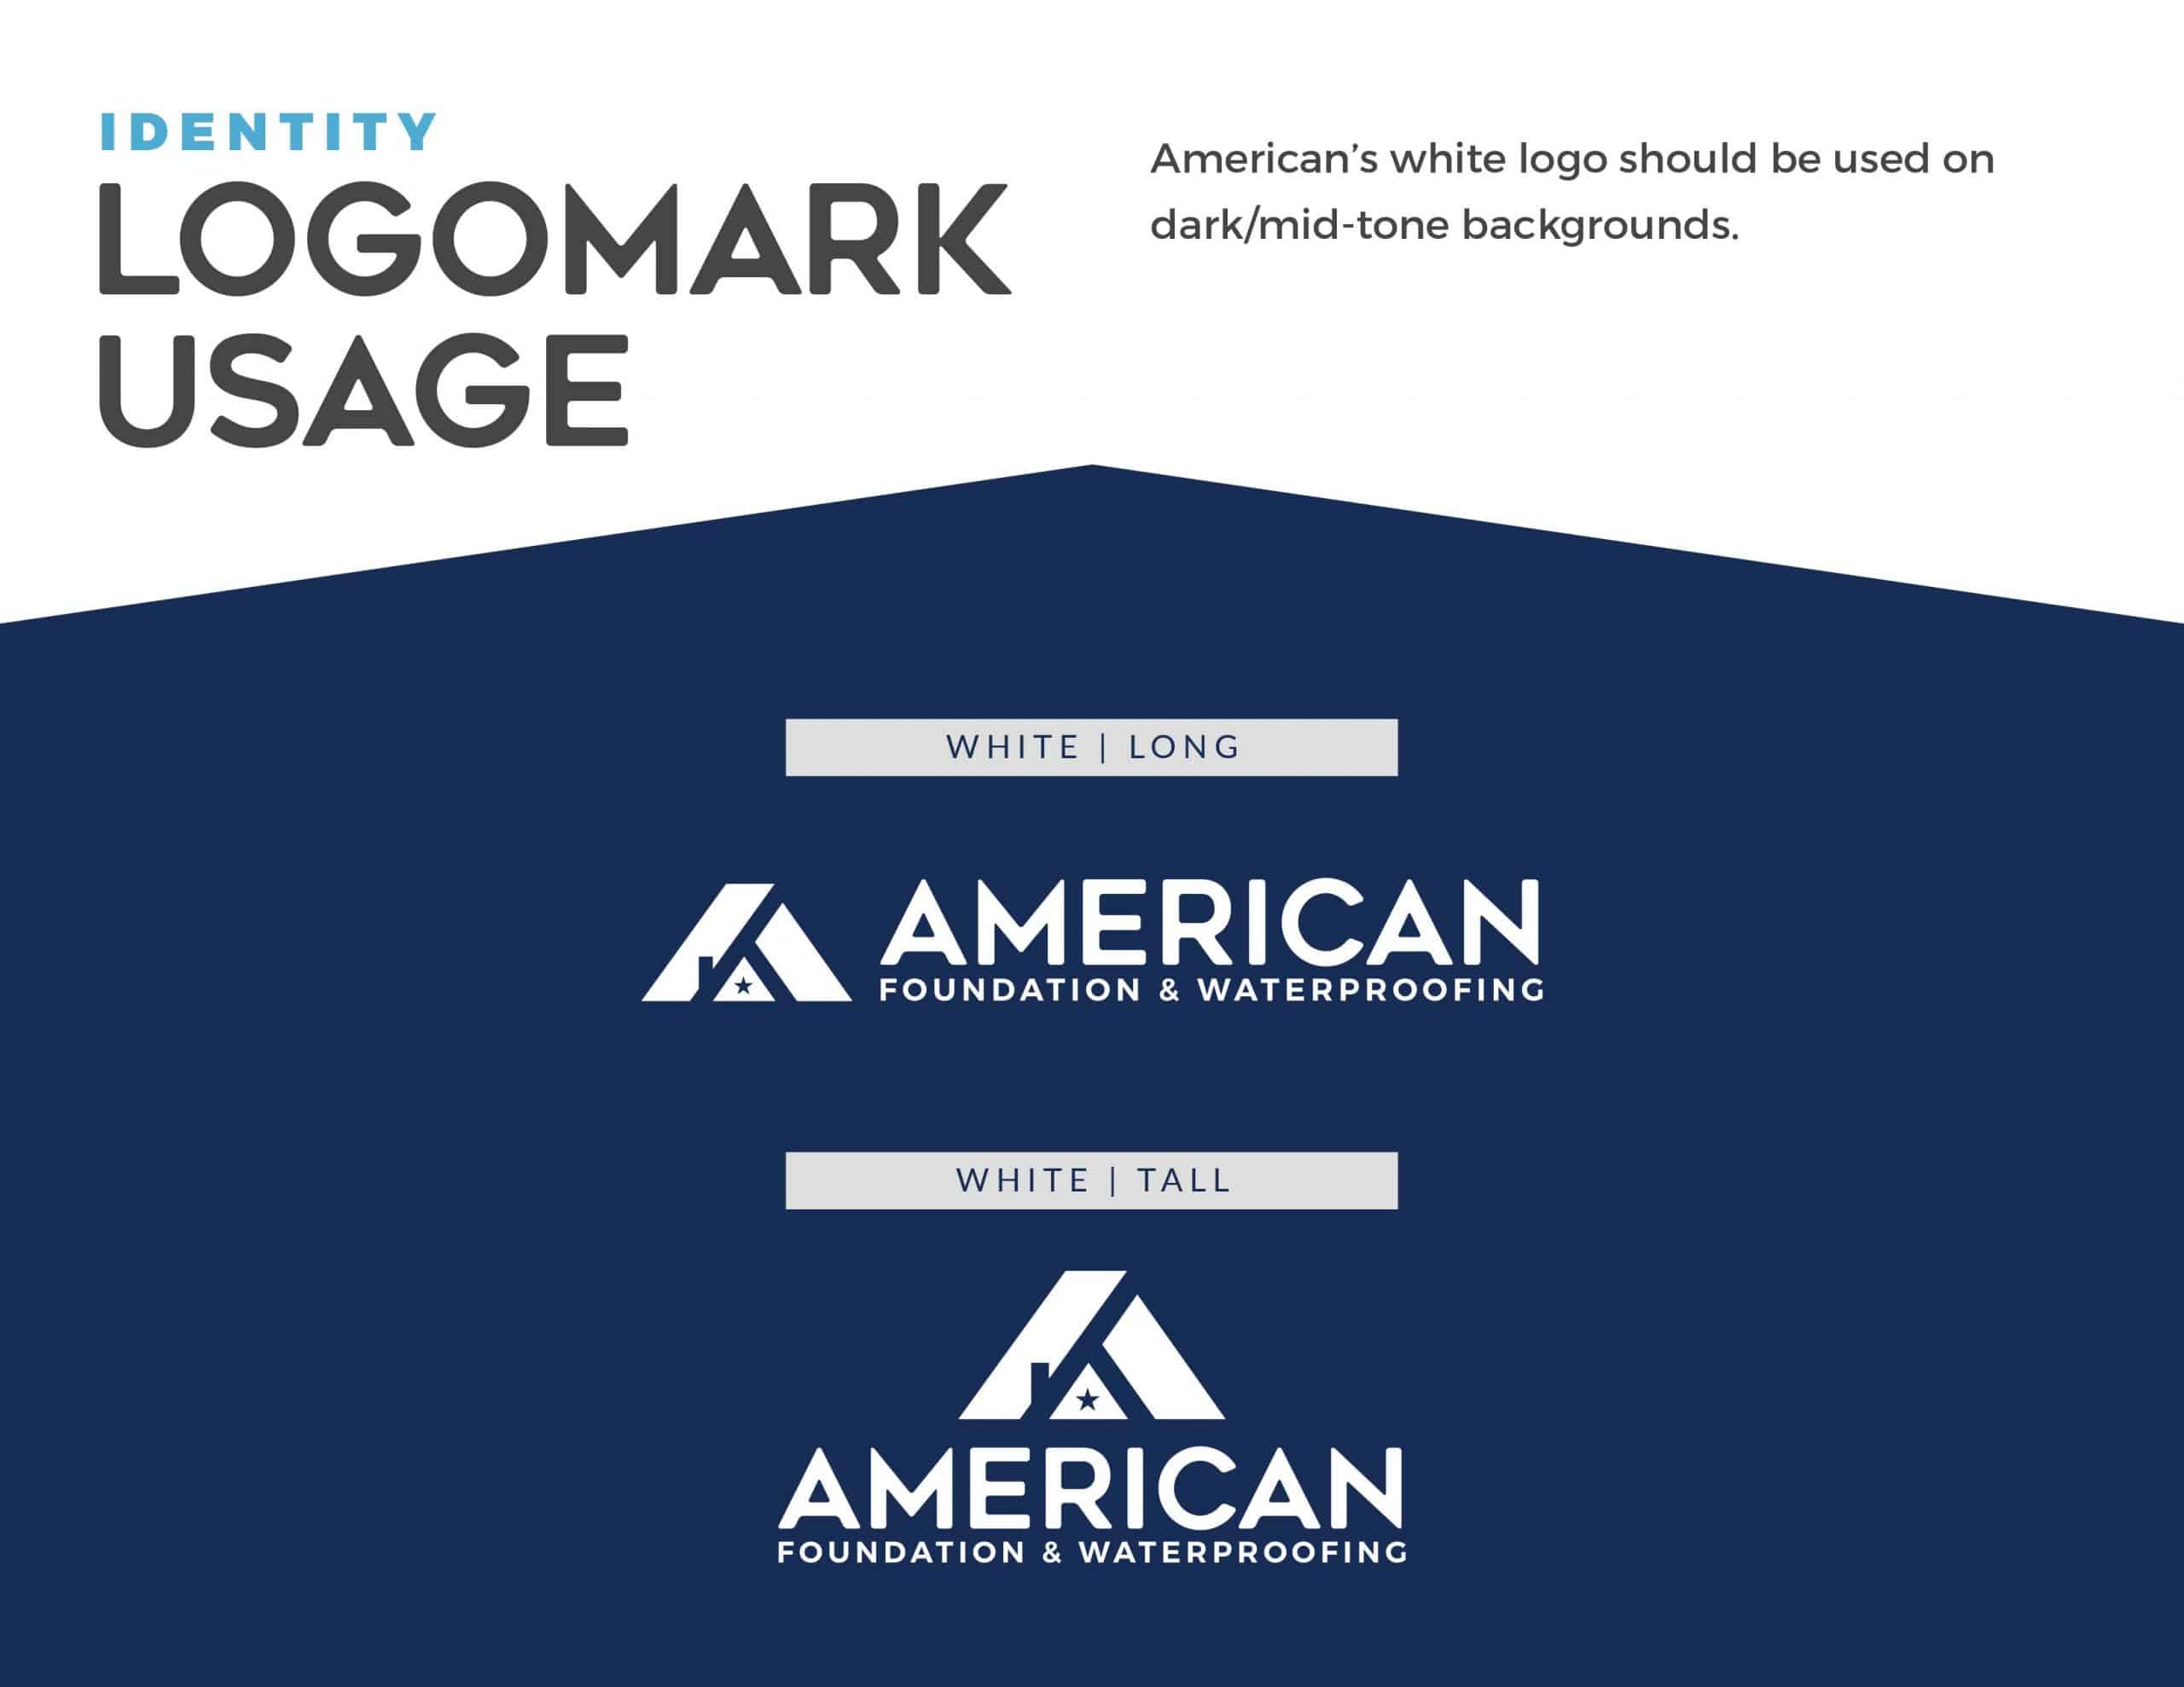 American Foundation & Waterproofing Brand Guide - Logo